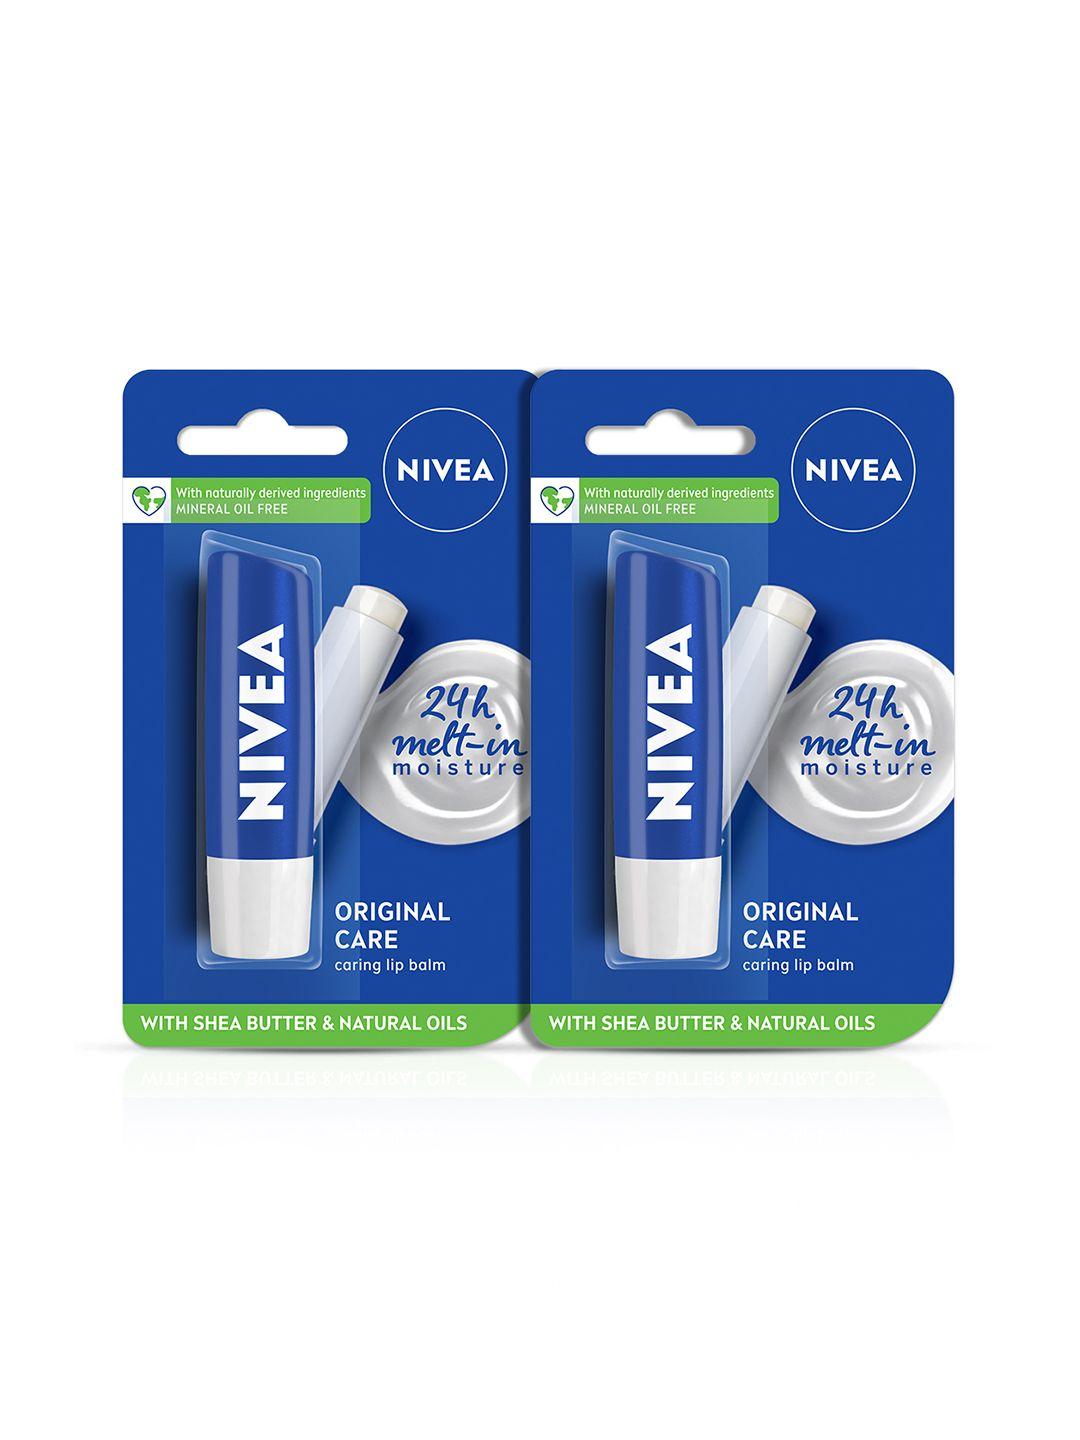 nivea-set-of-2-24-hr-melt-in-moisture-original-care-lip-balm